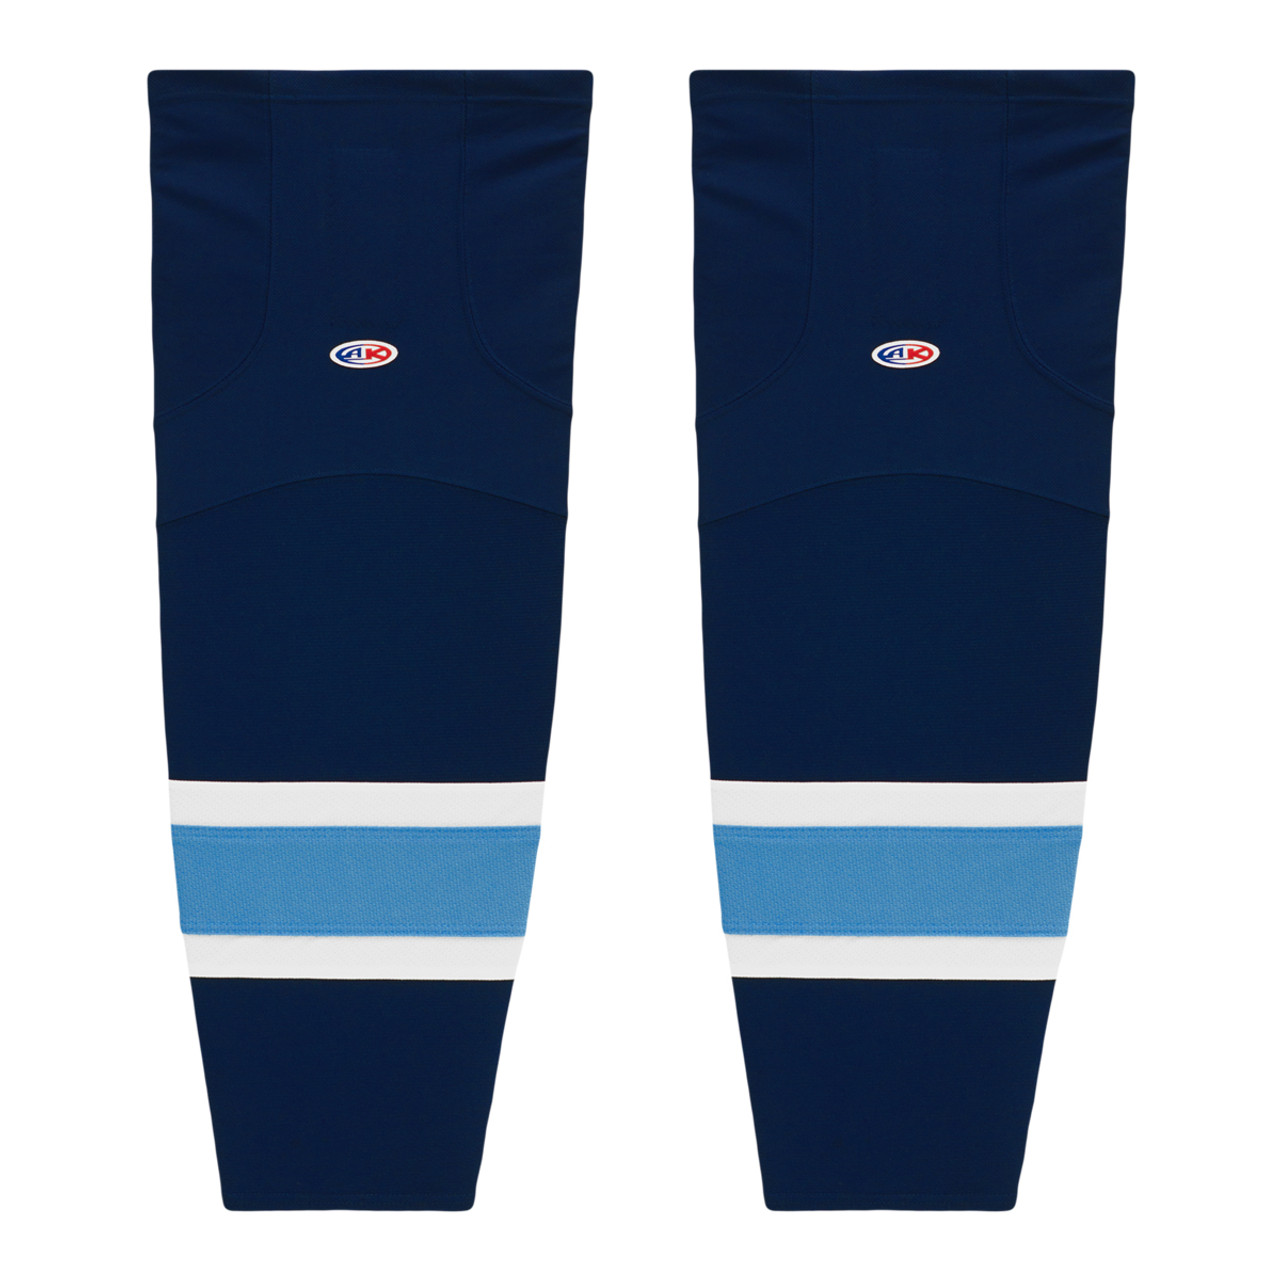 ATHLETIC KNIT Striped Hockey Socks- Int